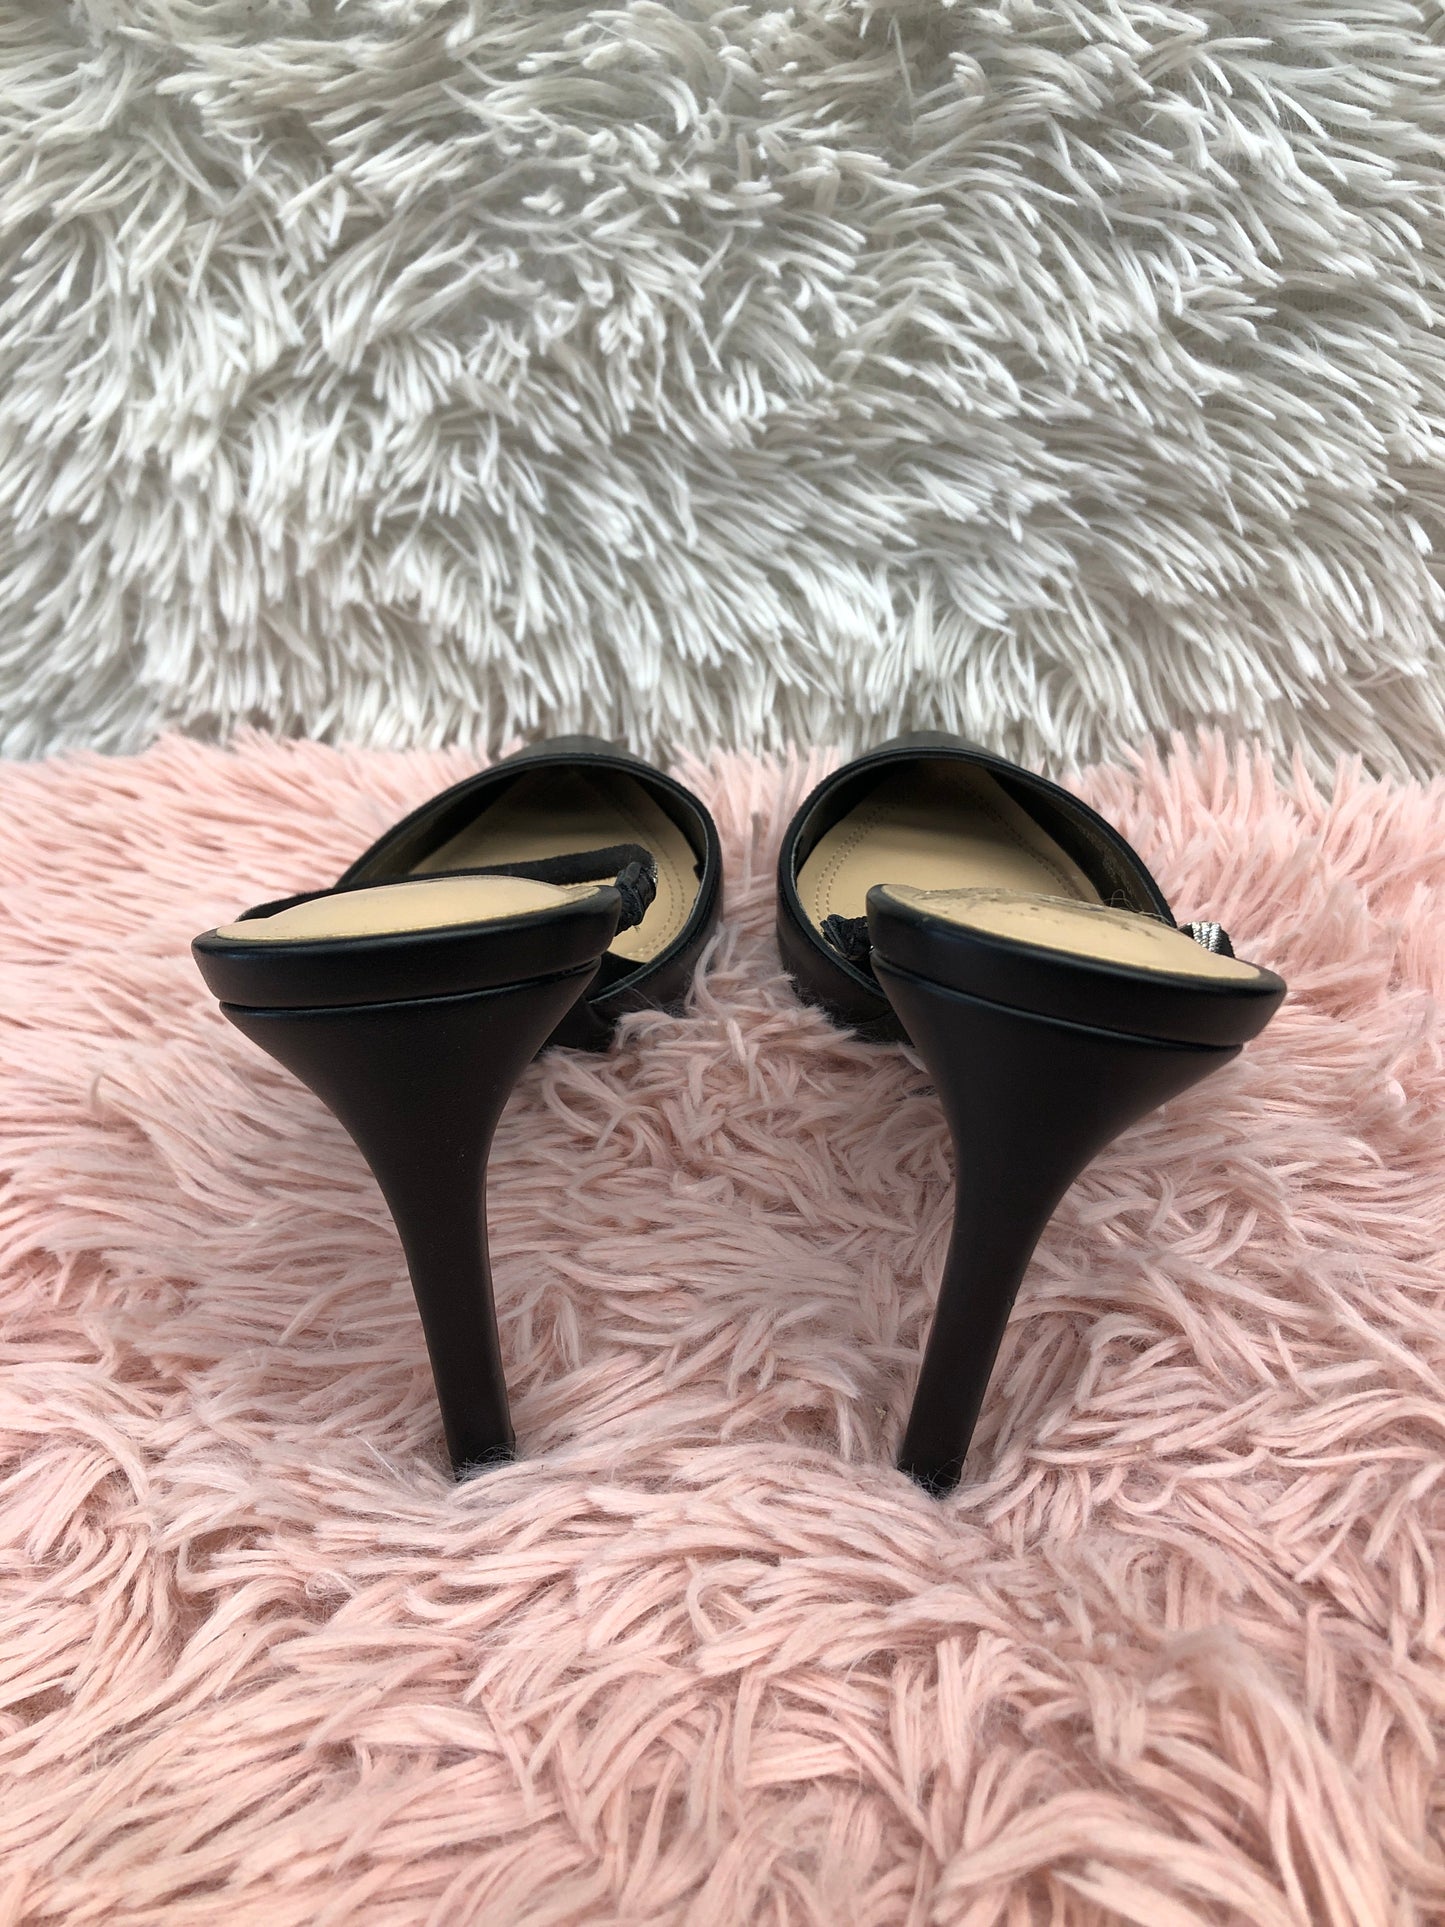 Black Shoes Heels Stiletto Unisa, Size 8.5